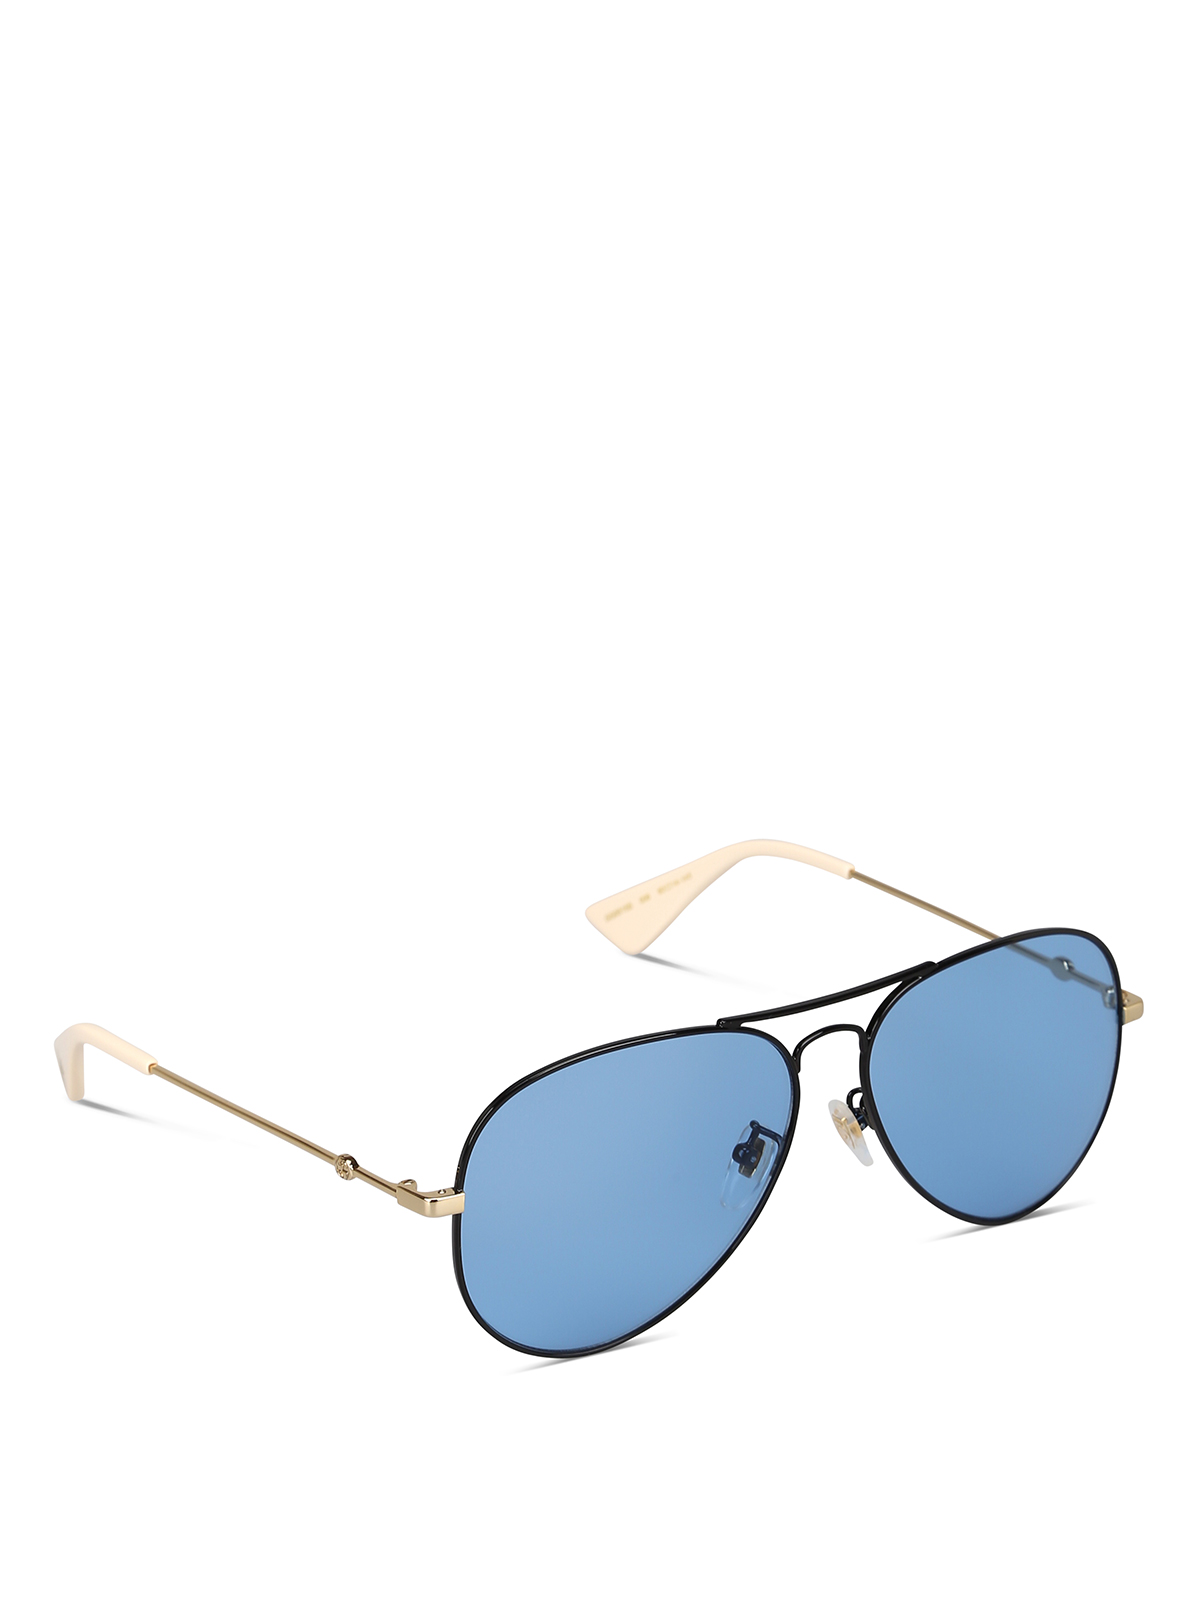 Gucci - Blue lens aviator sunglasses 